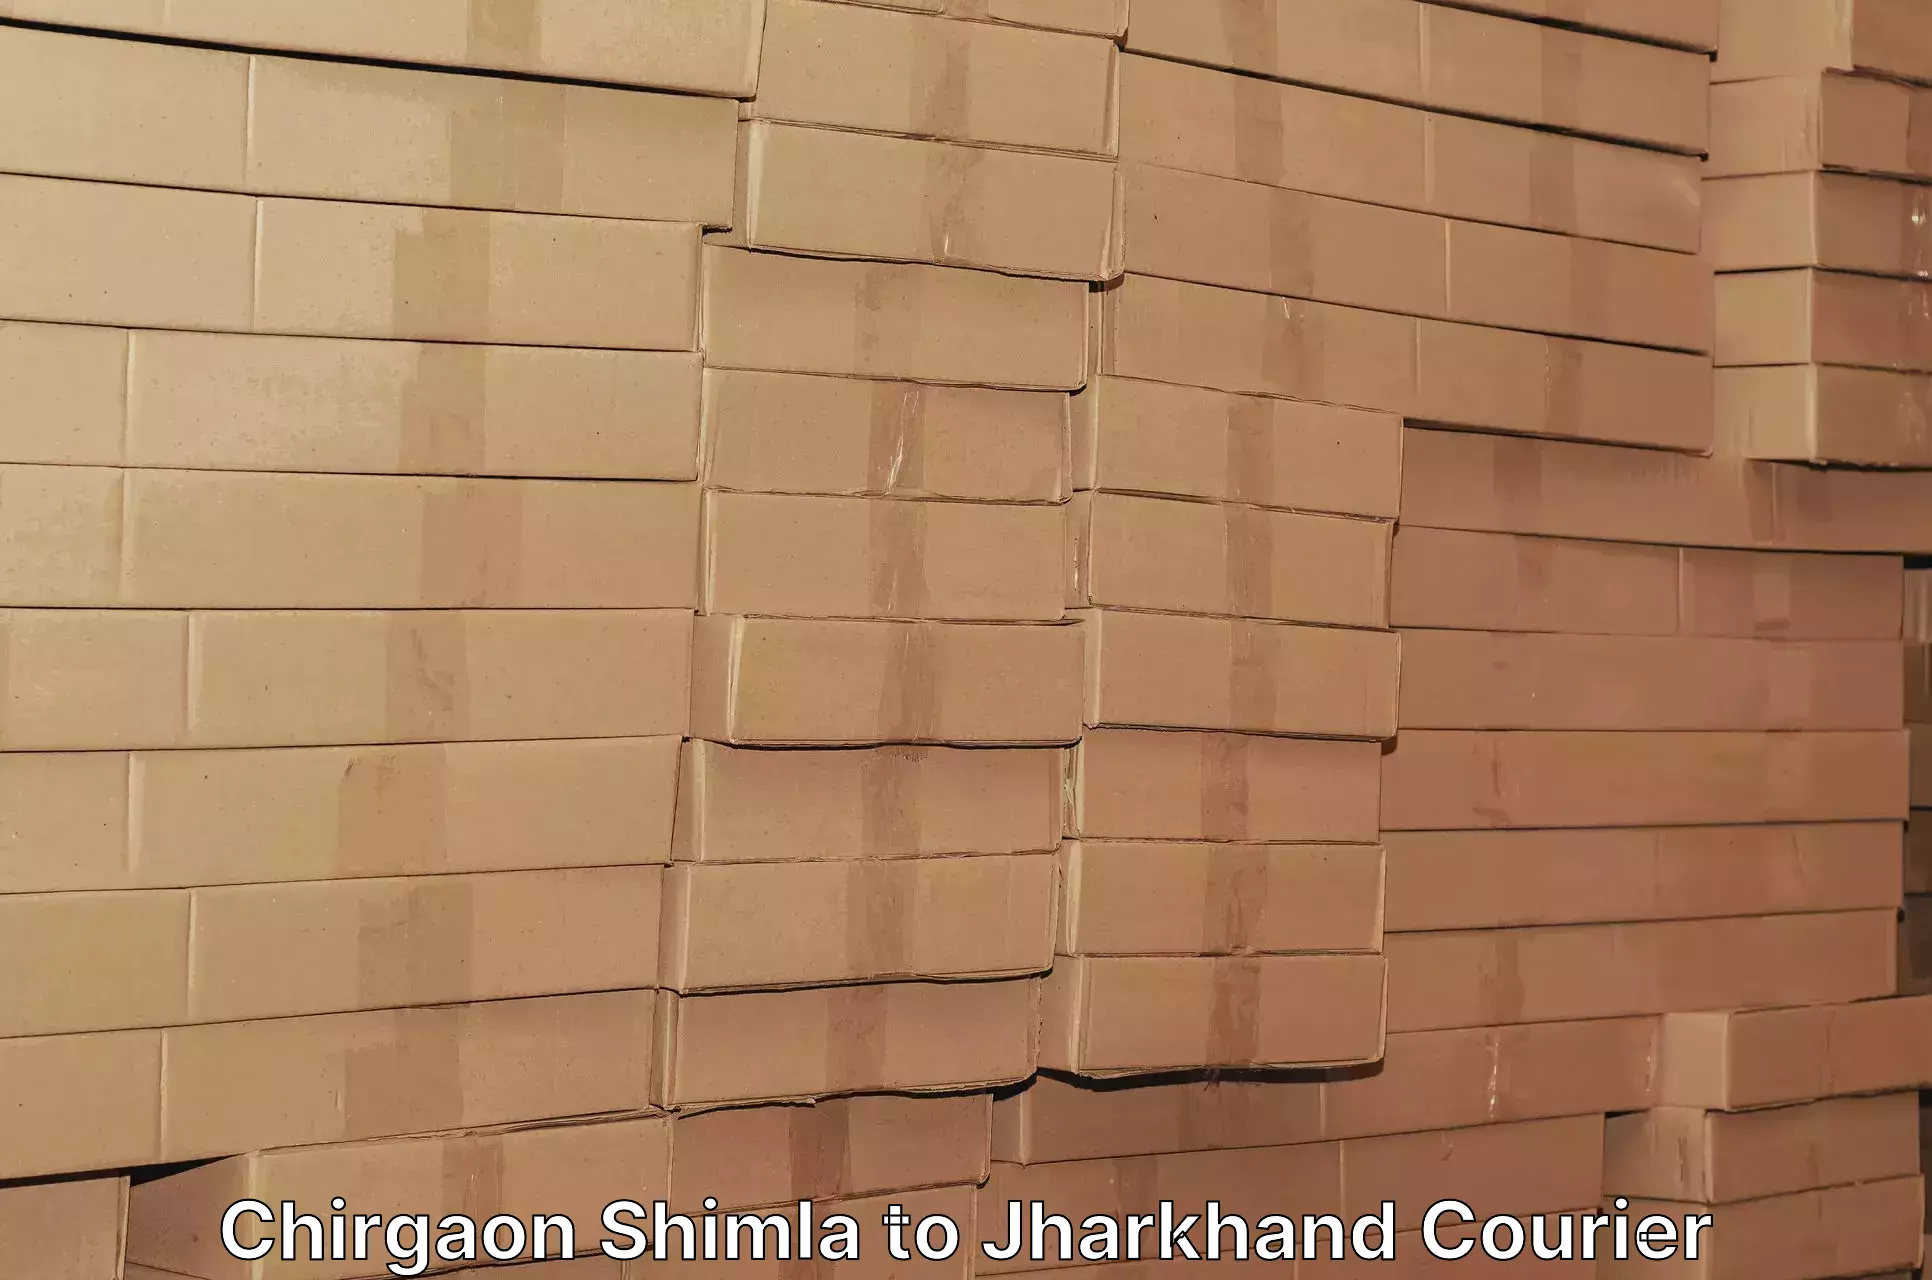 Urgent courier needs Chirgaon Shimla to Jharkhand